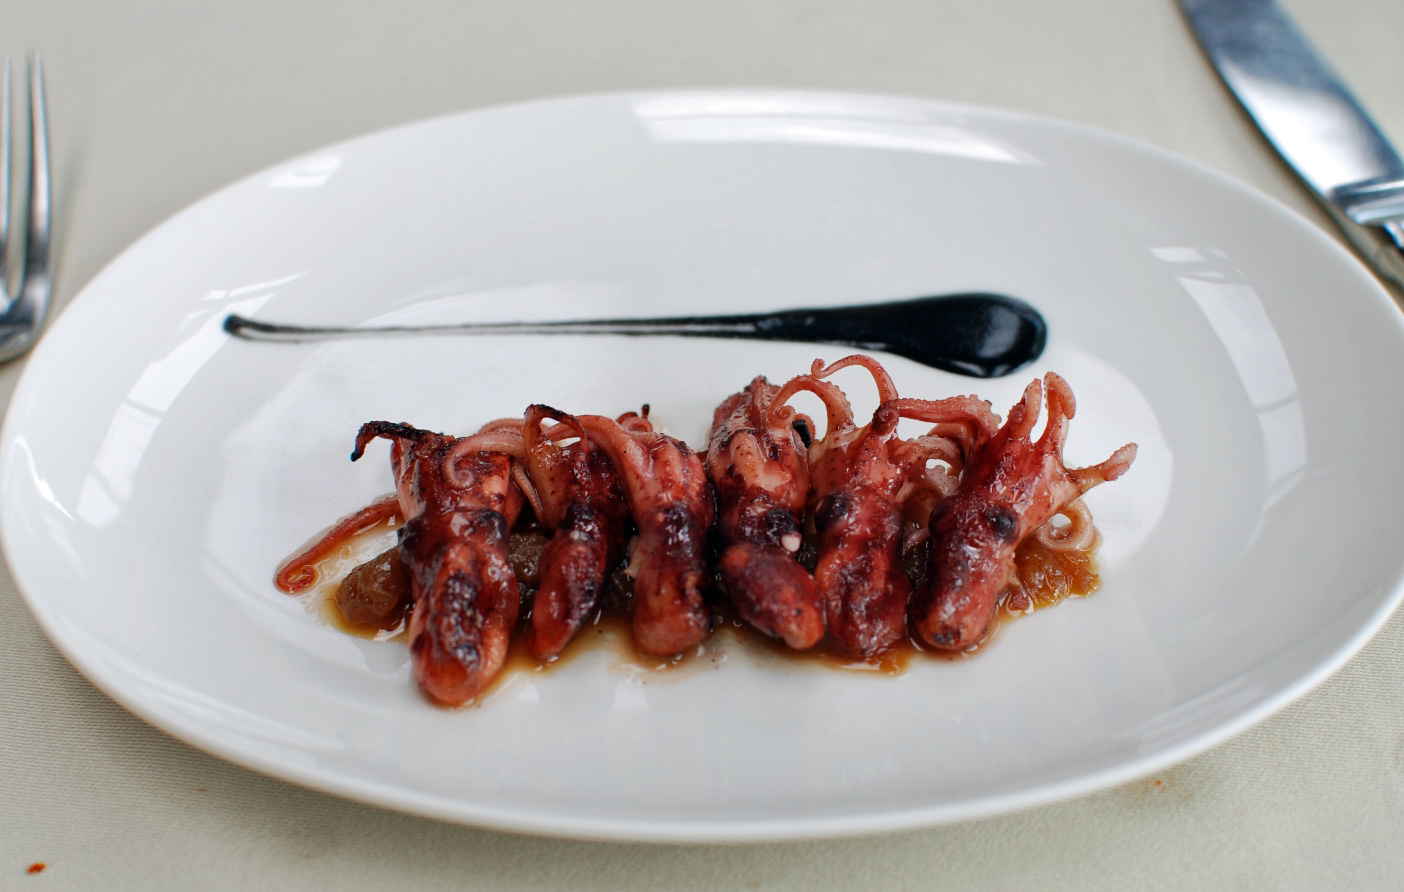 Baby octopus at Asador Etxebarri | NY Food Journal